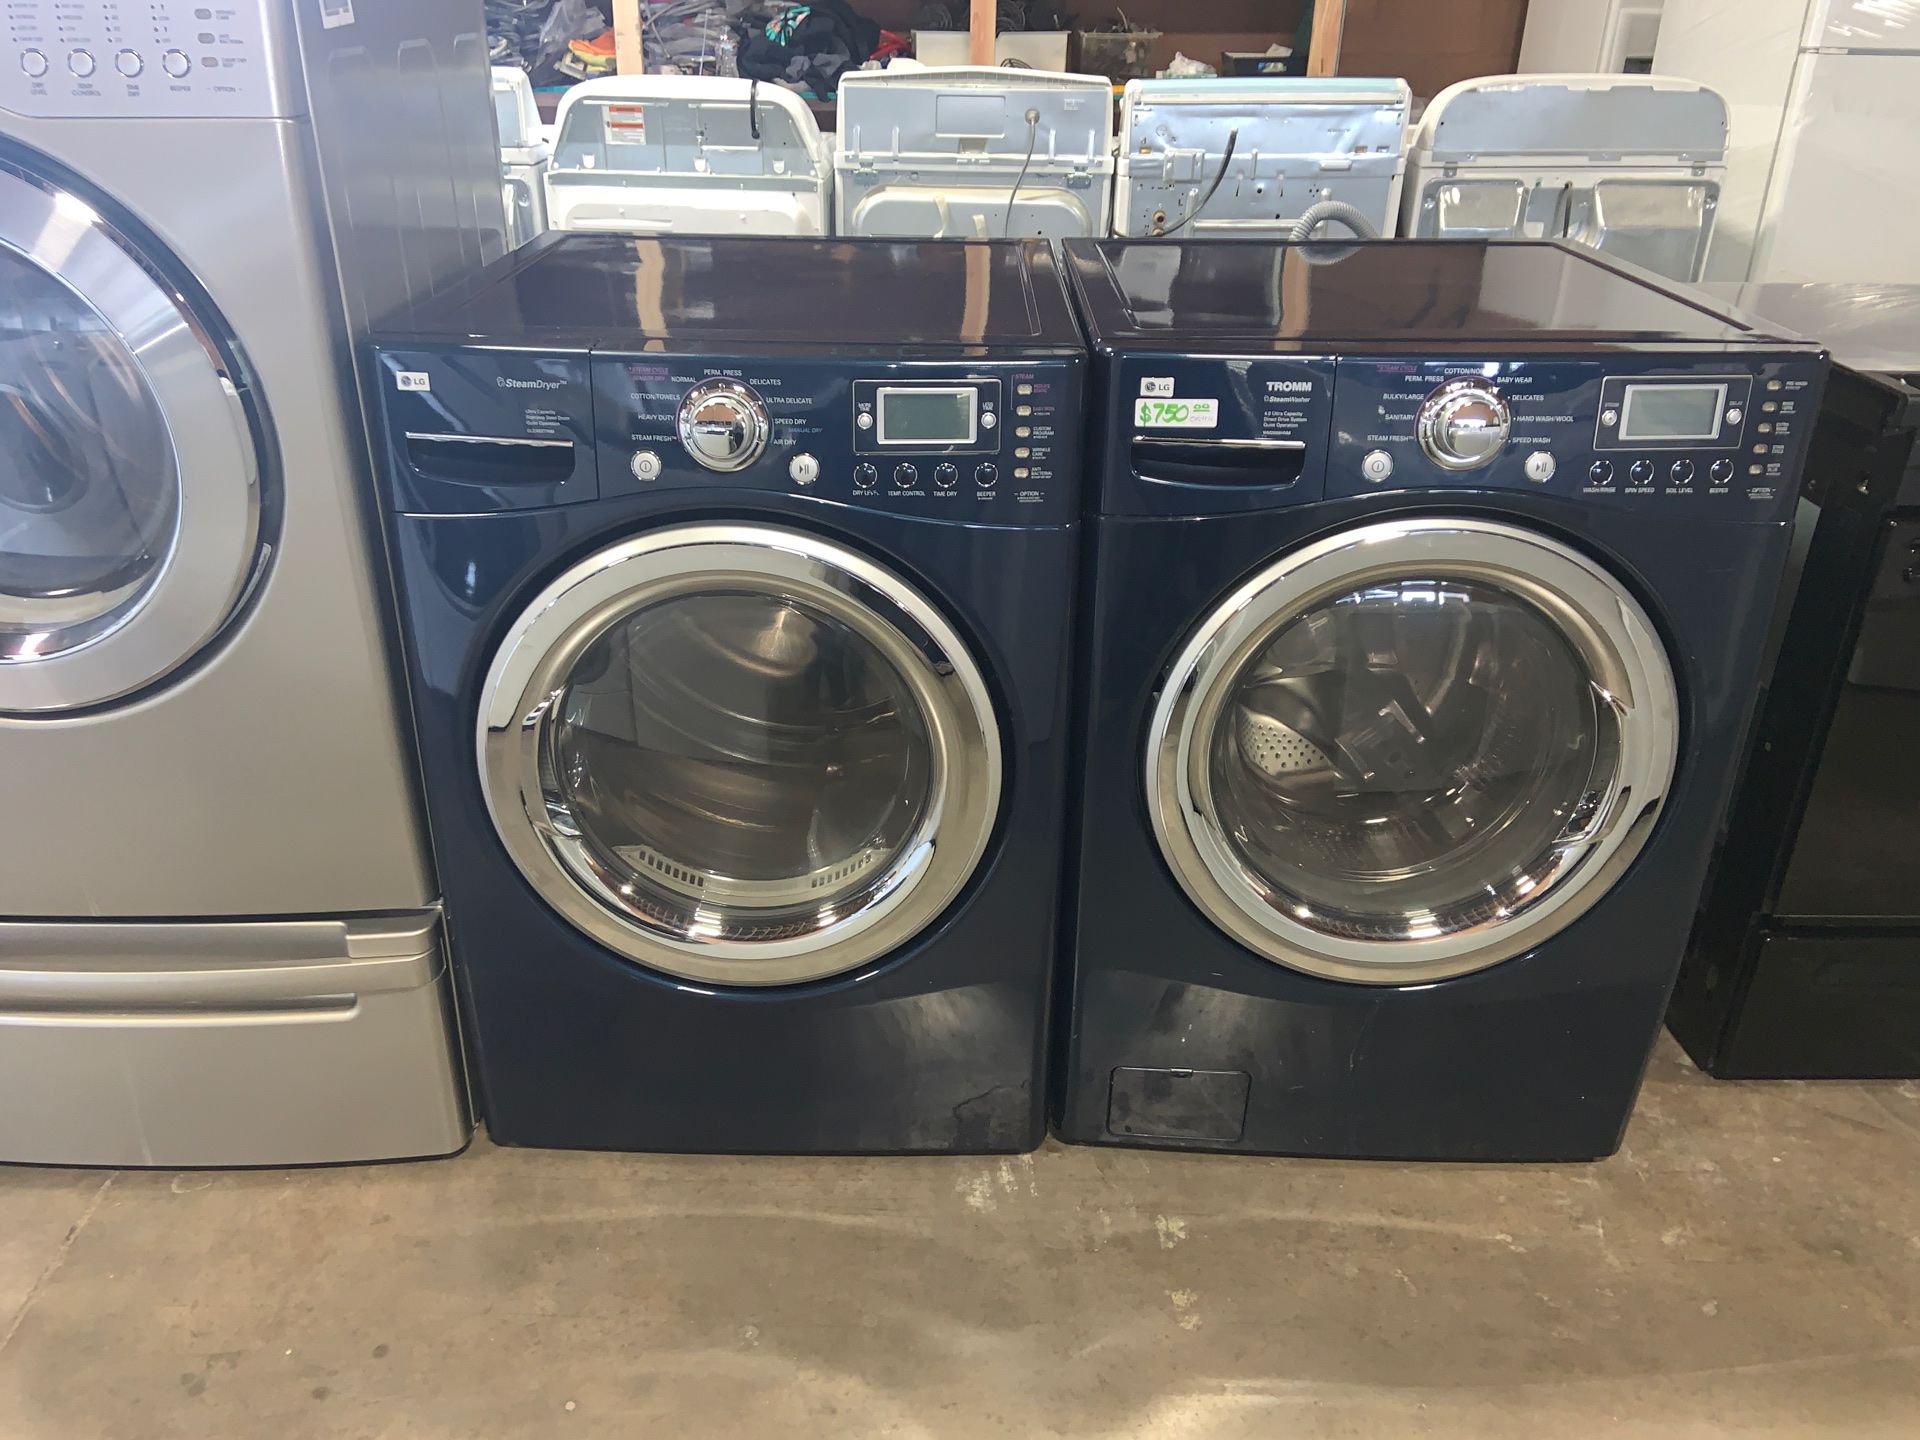 LG washer & dryer navy blue electric front load set !!